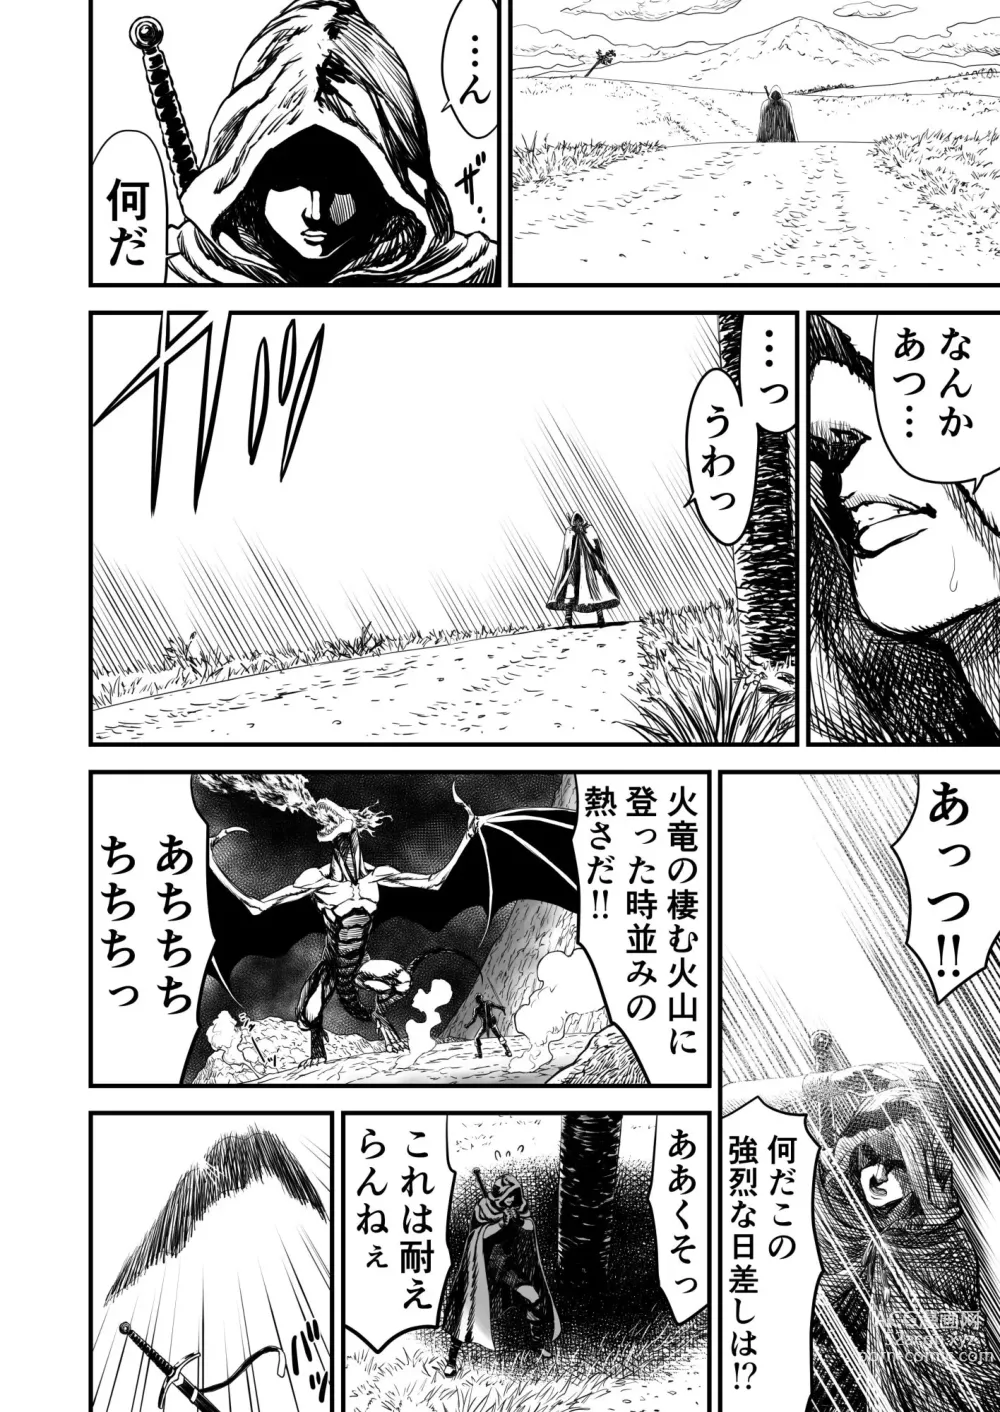 Page 81 of doujinshi Awatenaide Hitoyasumi